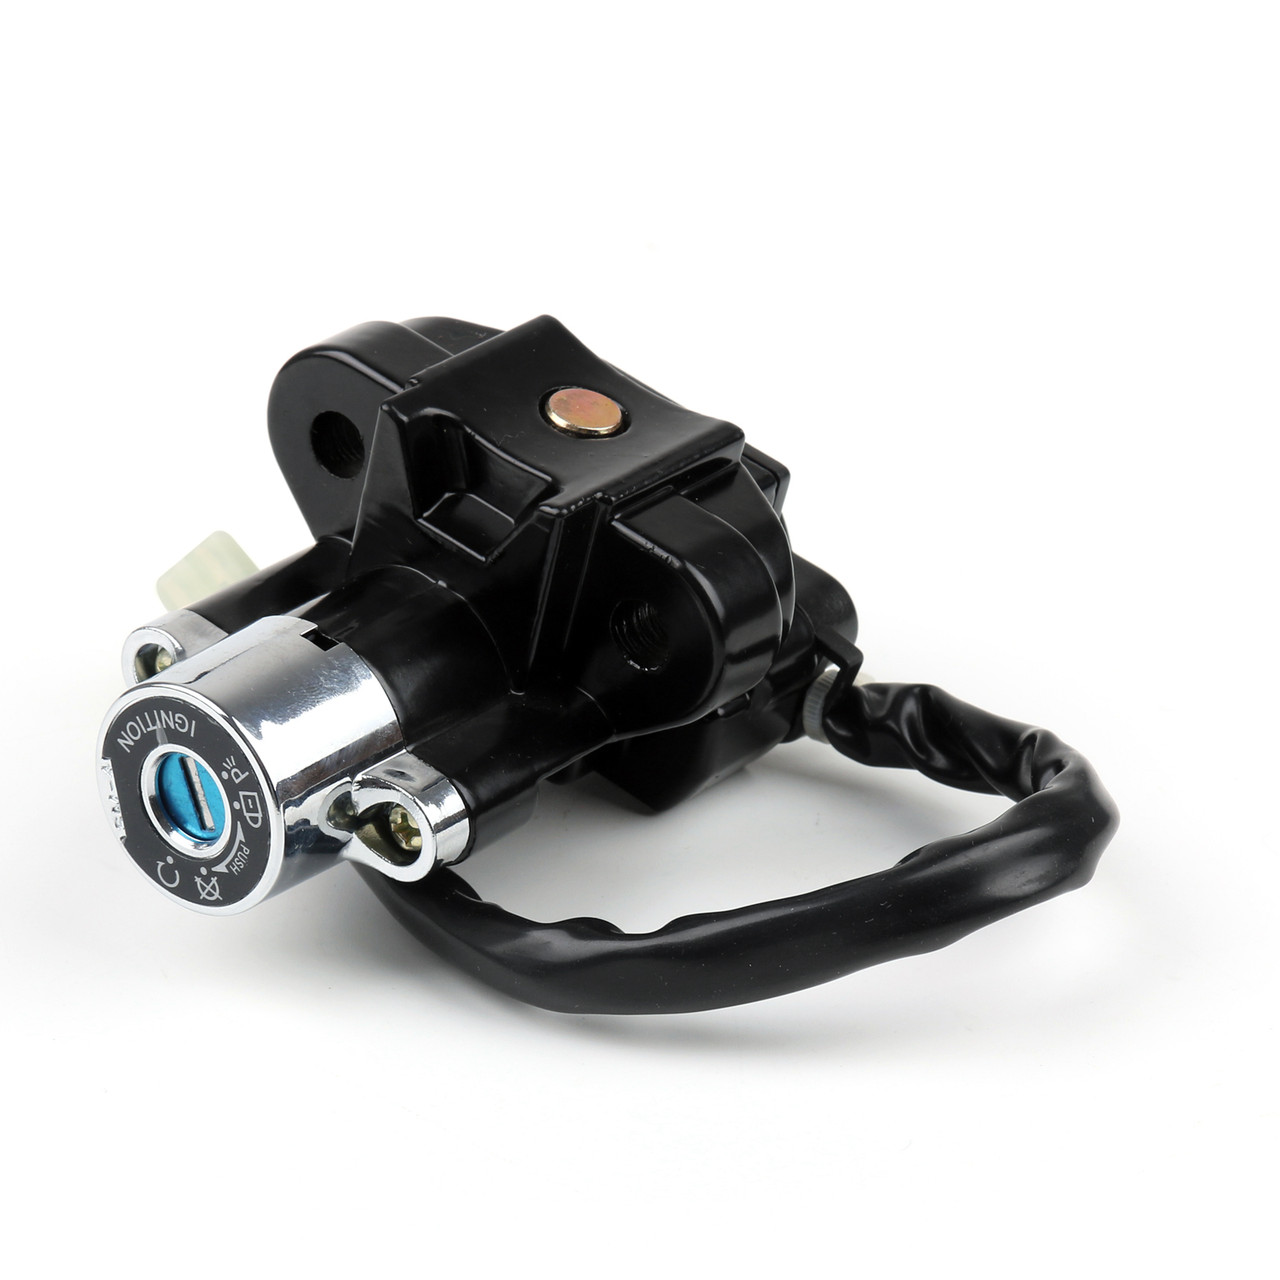 Ignition Switch Lock & Fuel Gas Cap Key Set For Suzuki GSF600 GSF1200 Bandit